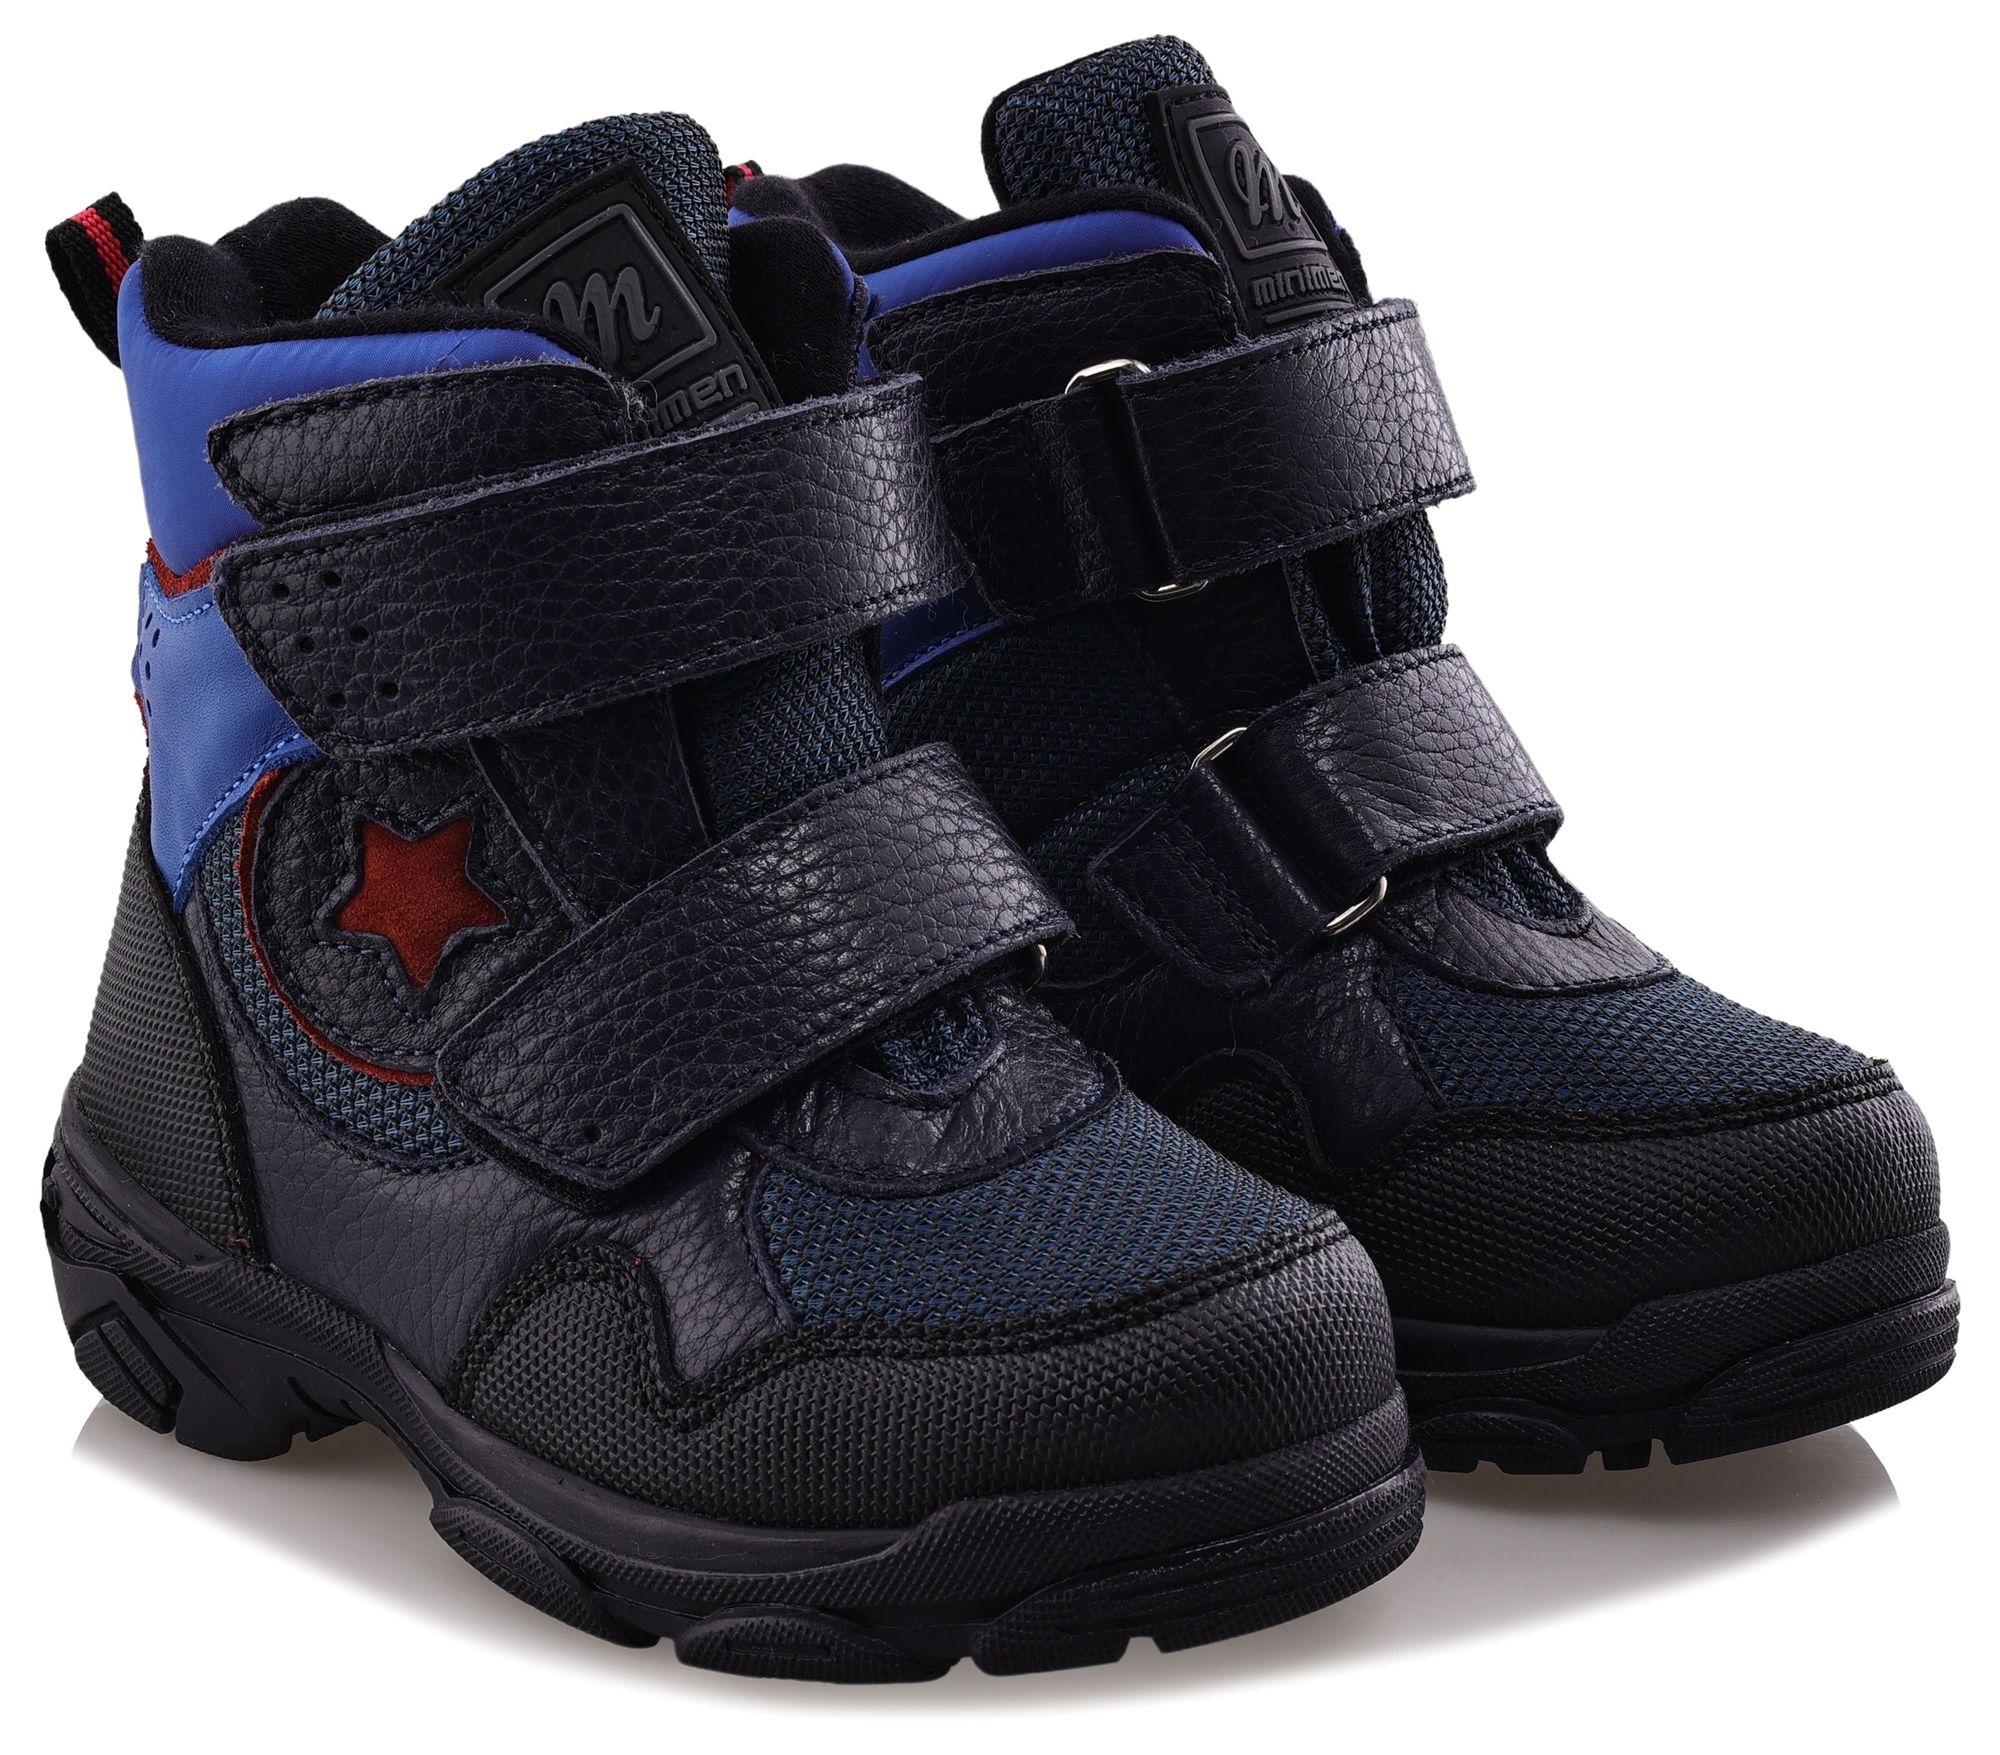 Ботинки Minimen для мальчиков, тёмно-синие, размер 23, 2658-52-23B-01 ботинки minimen для девочек сиреневые размер 27 2658 63 23b 04